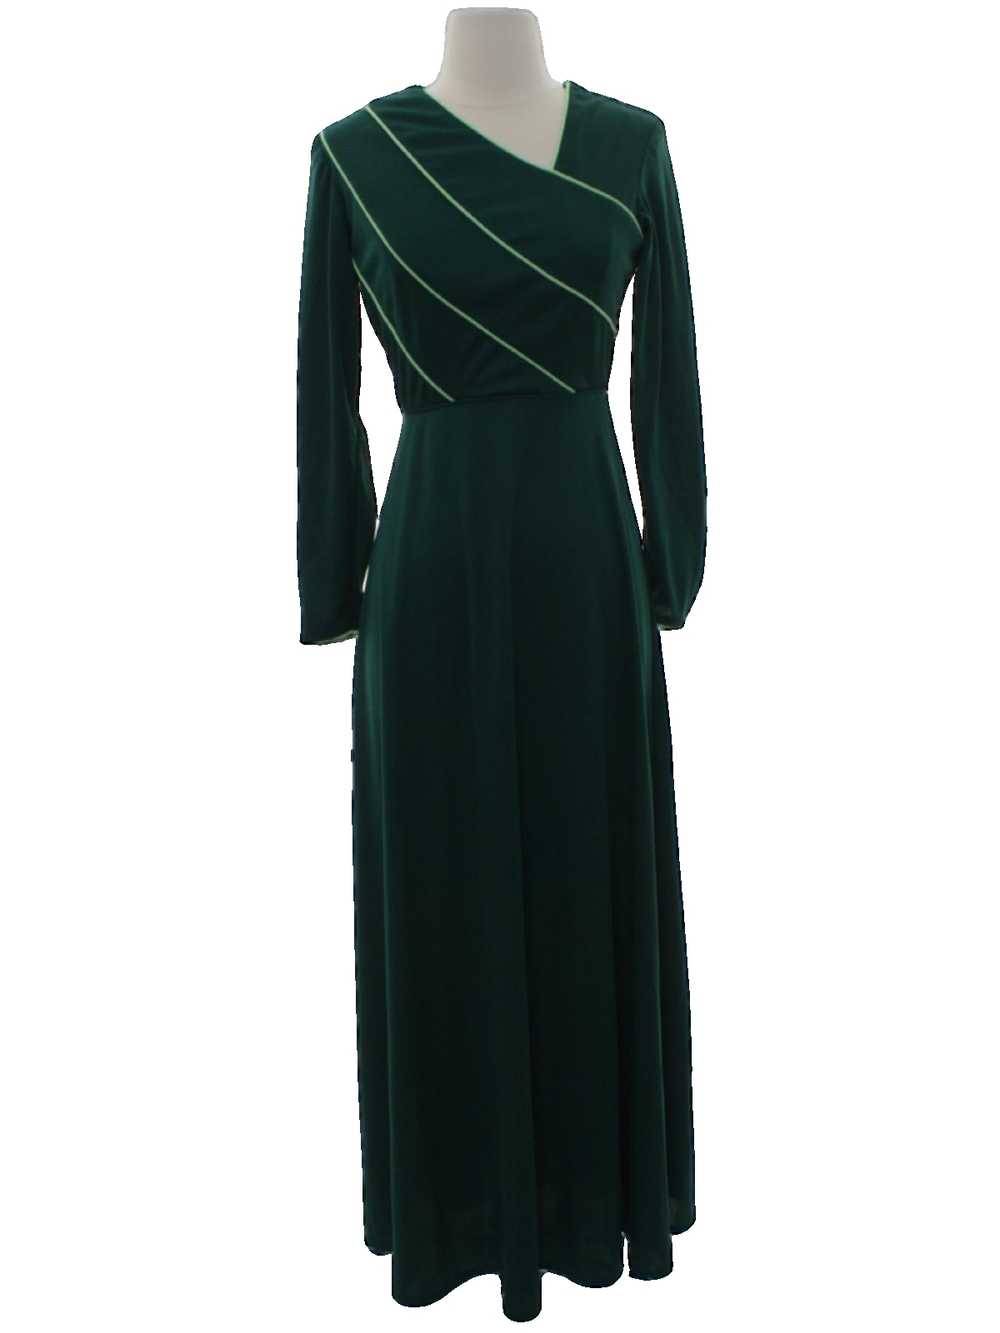 1960's Union label Maxi Dress - image 1